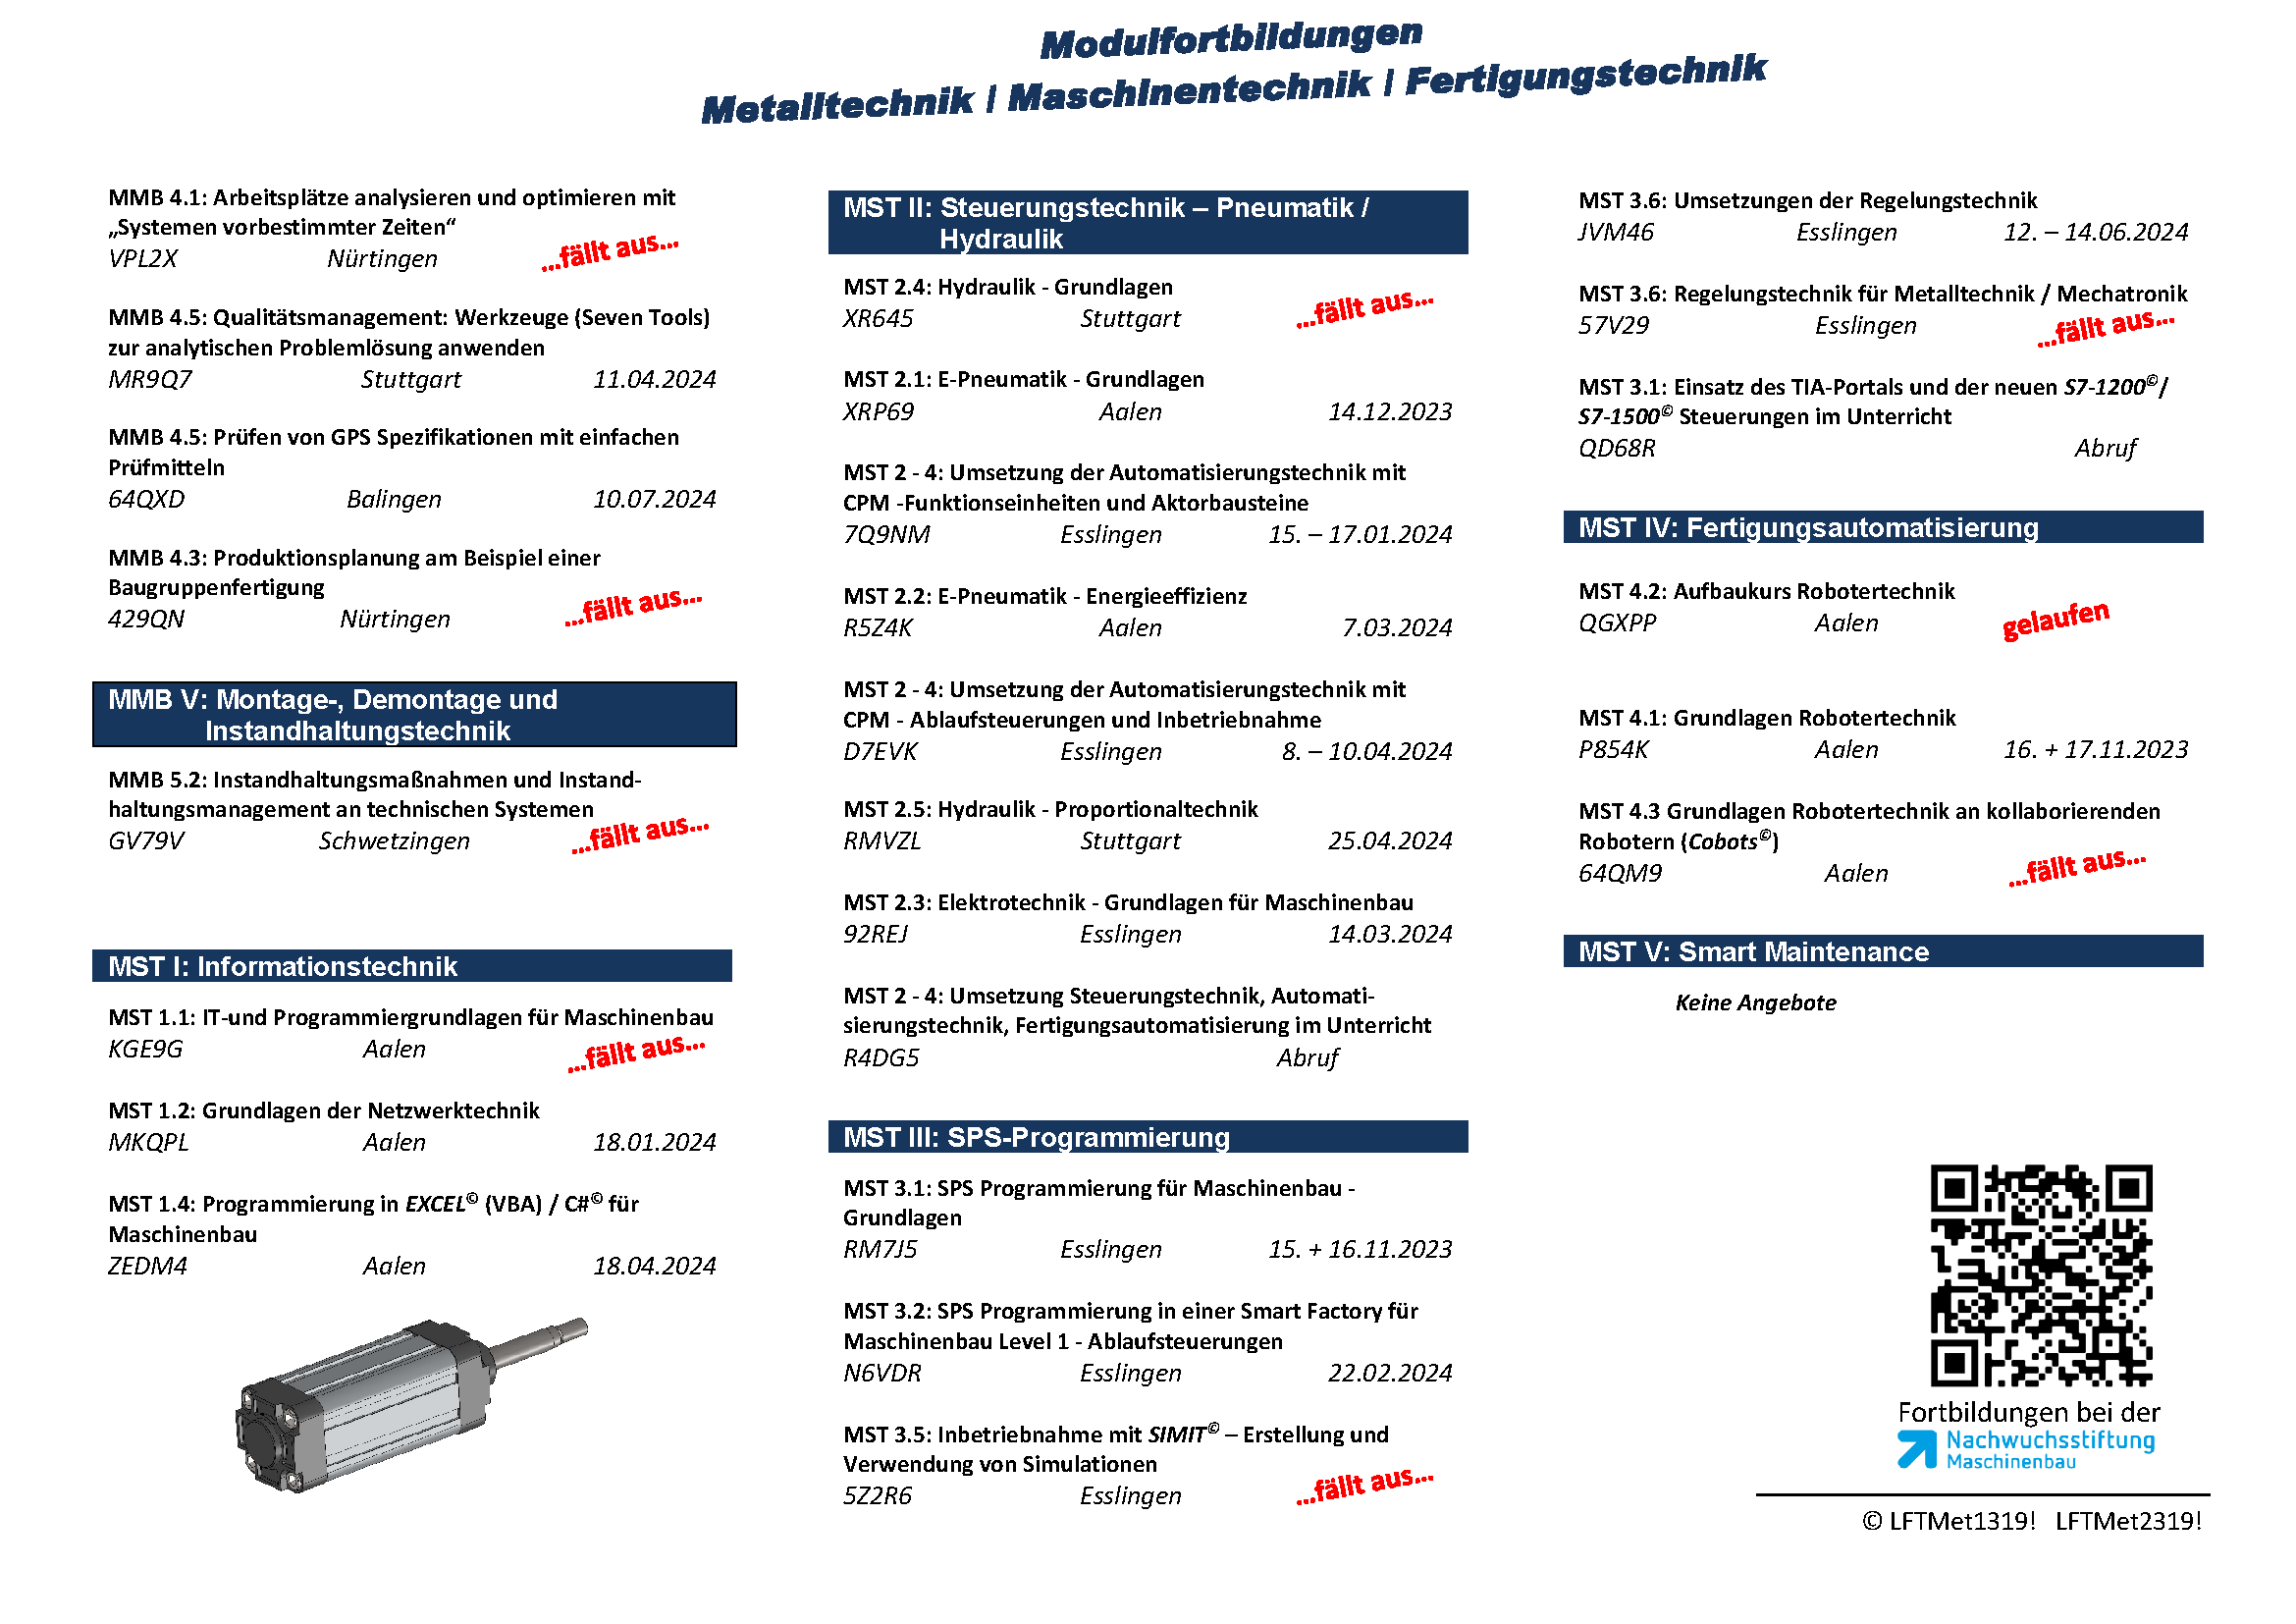 Modulfortbildungen Metalltechnik / Maschinentechnik / Fertigungstechnik  - Barrierefrei pdf Seite 3